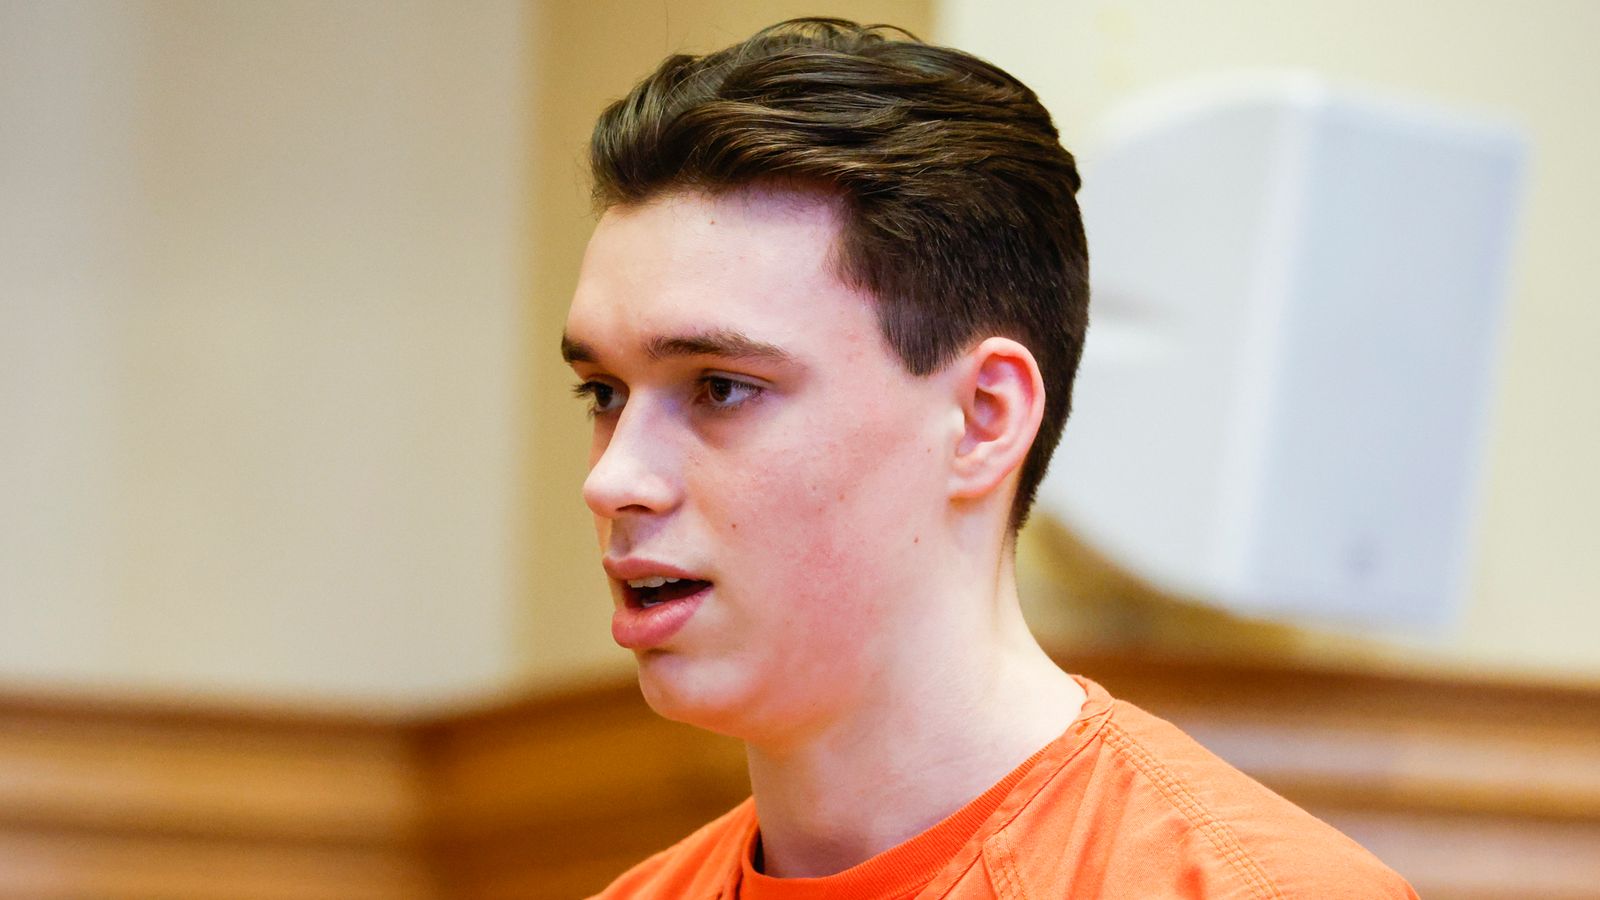 Iowa teenager who killed teacher over bad grade is sentenced